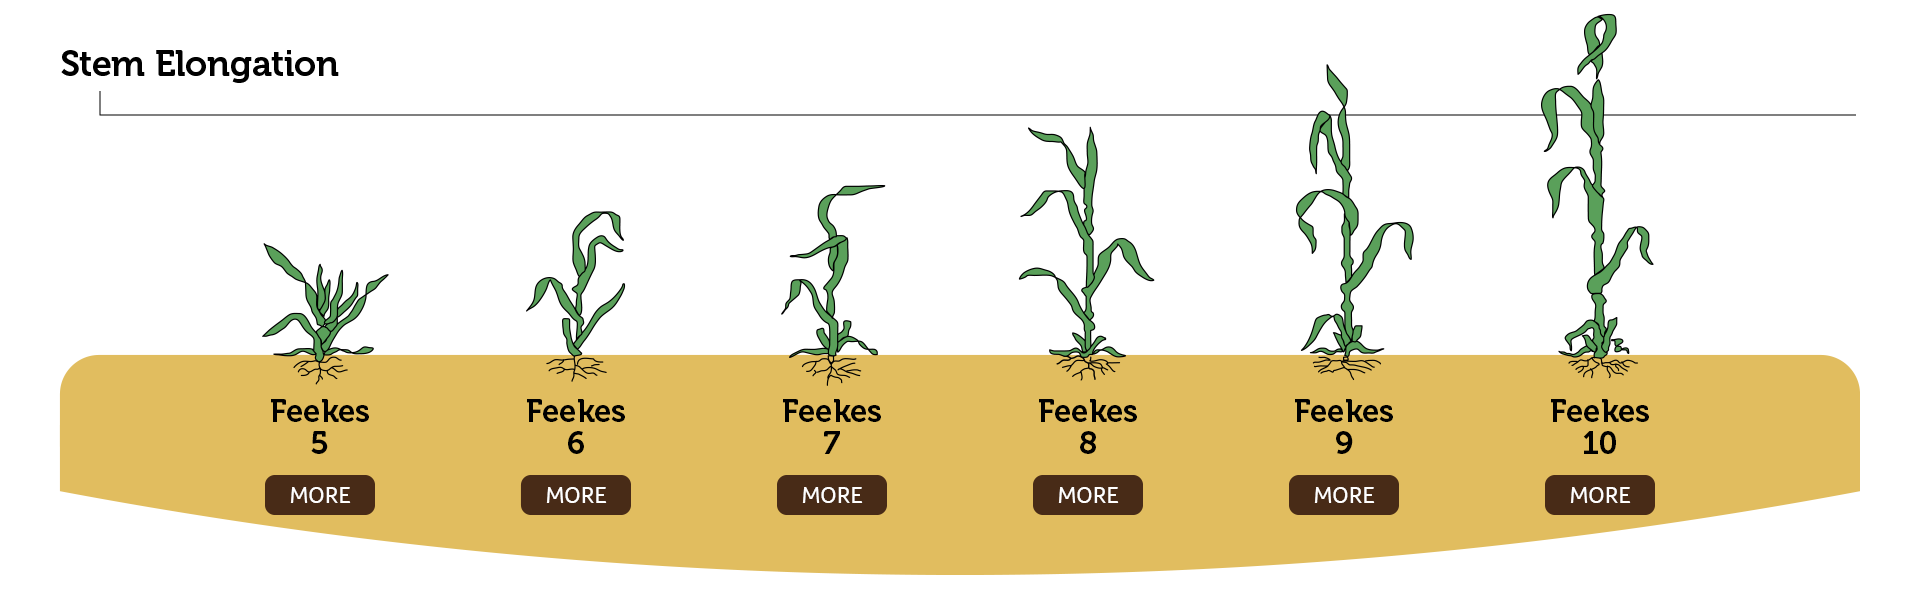 Wheat Growth Infographic - Stem Elongation